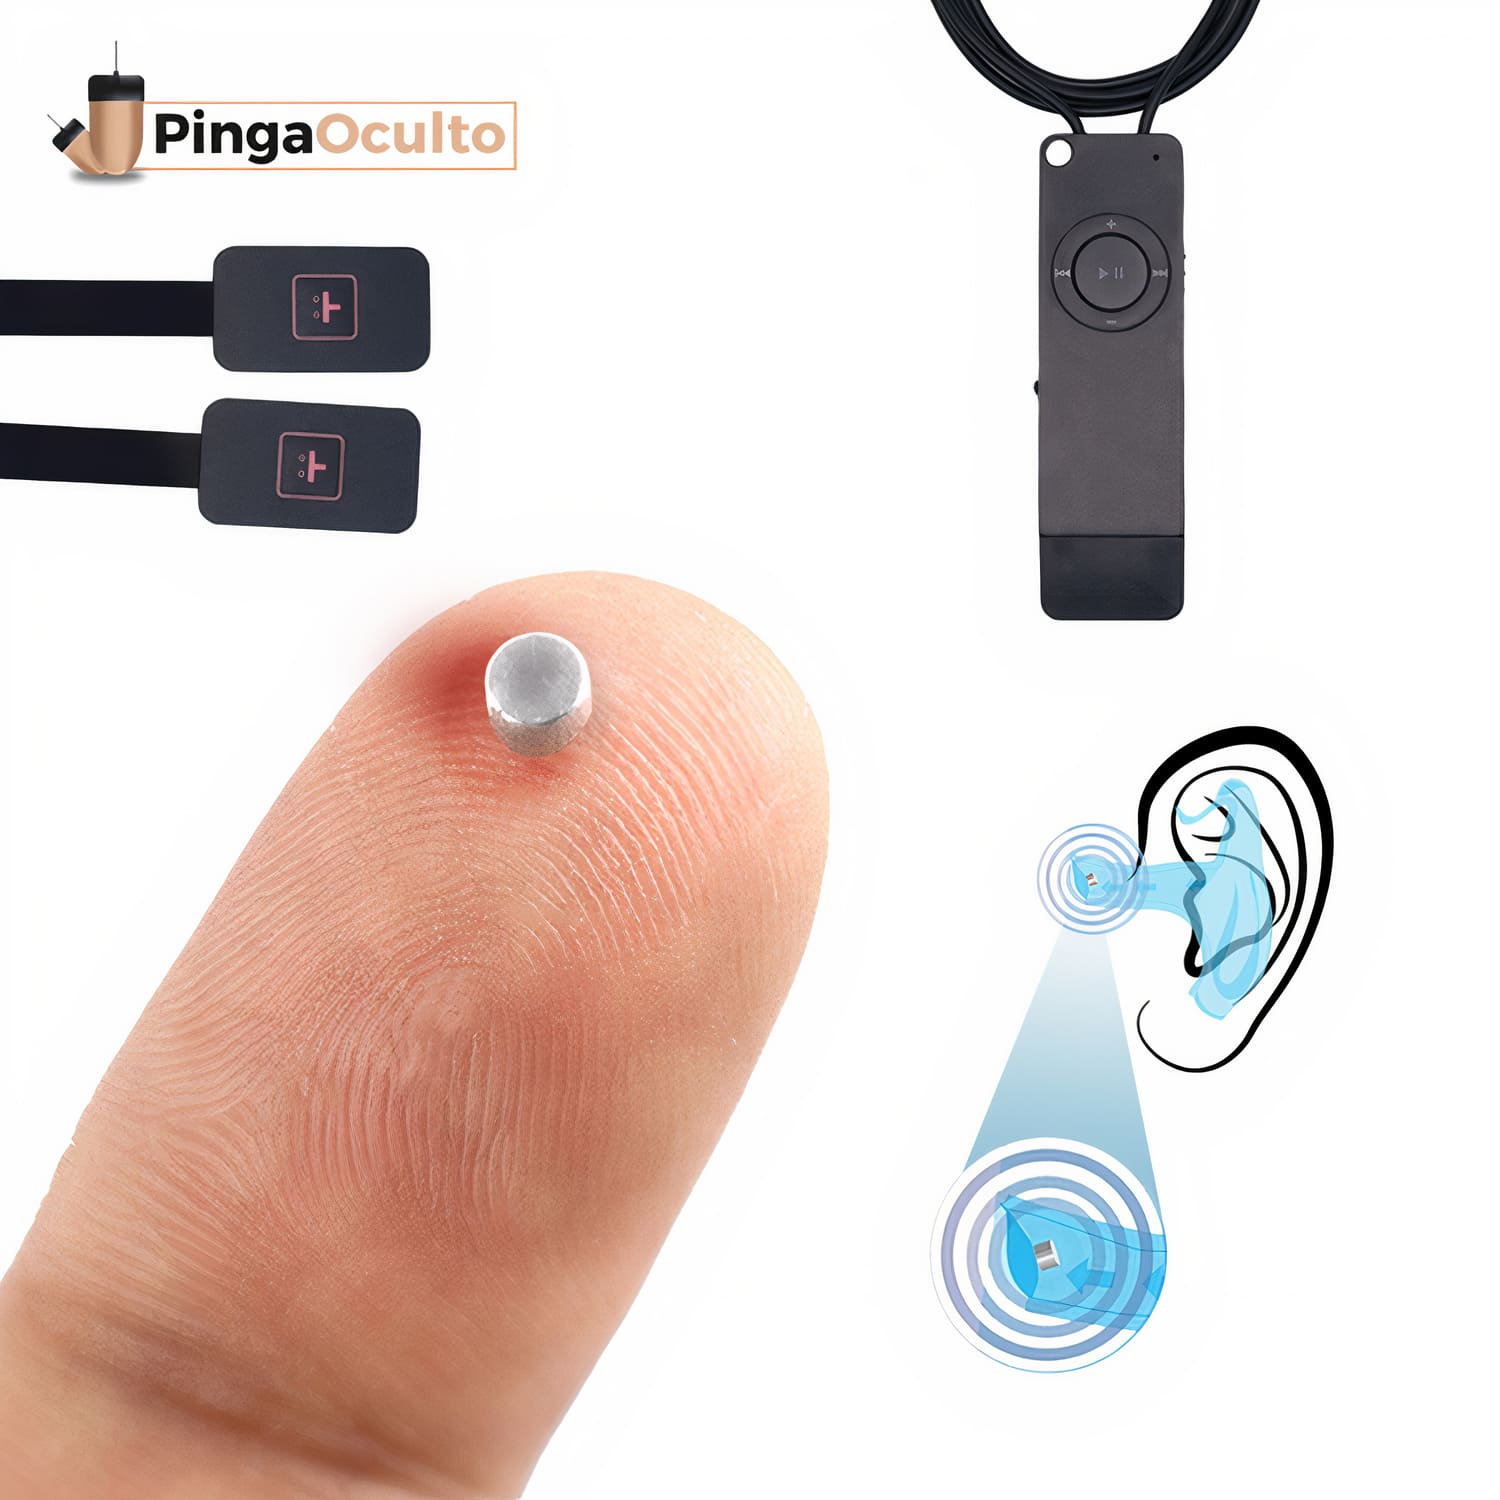 Pinganillo Bluetooth - PingaOculto ®